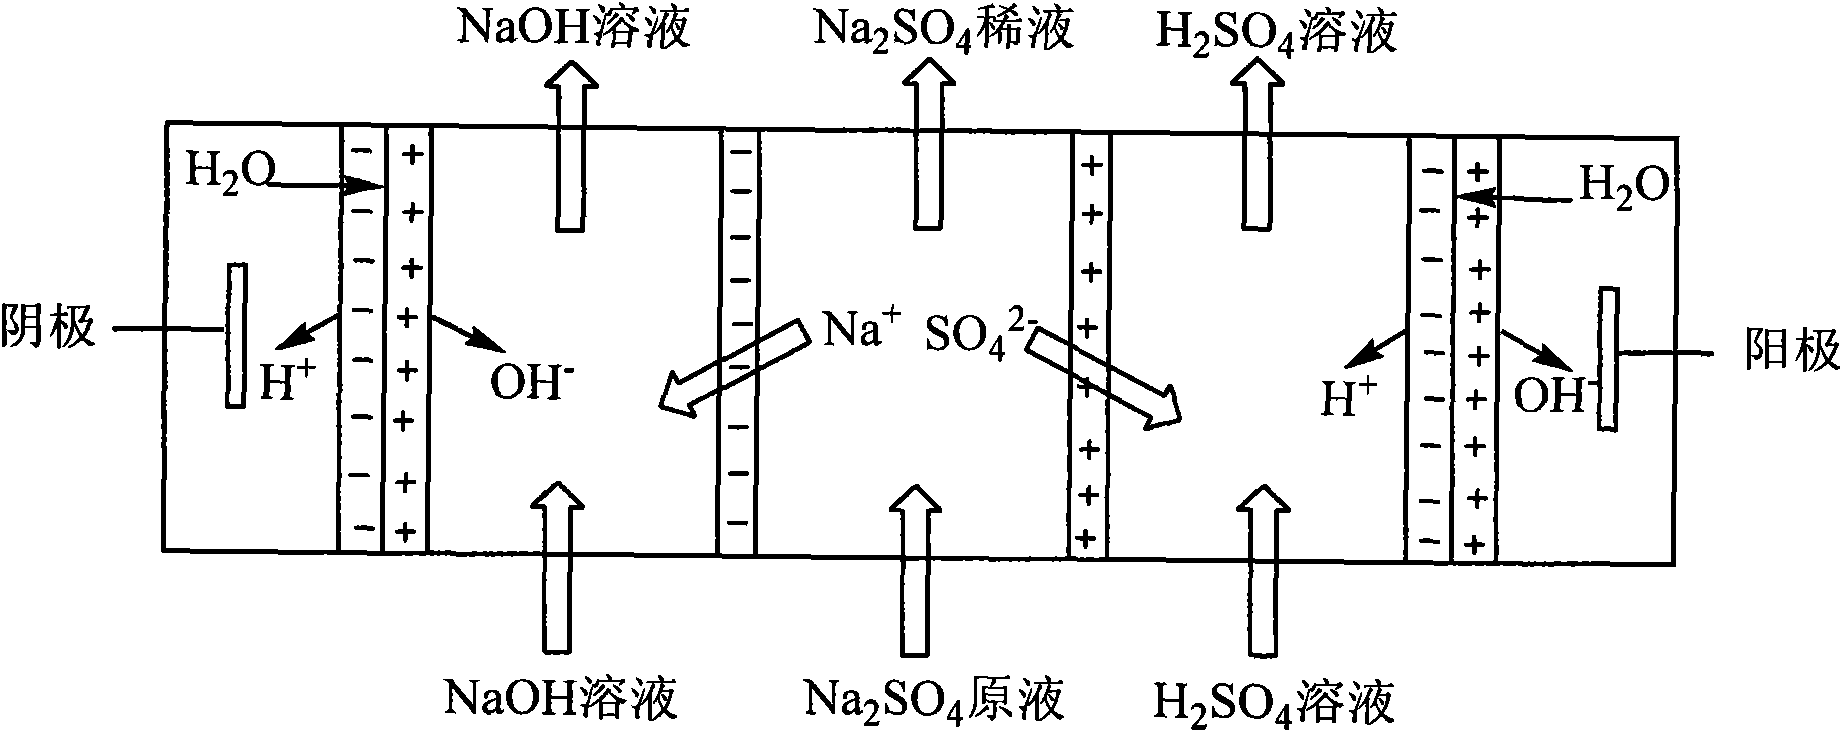 Reproduction method for sodium-base flue gas desulfurization liquid